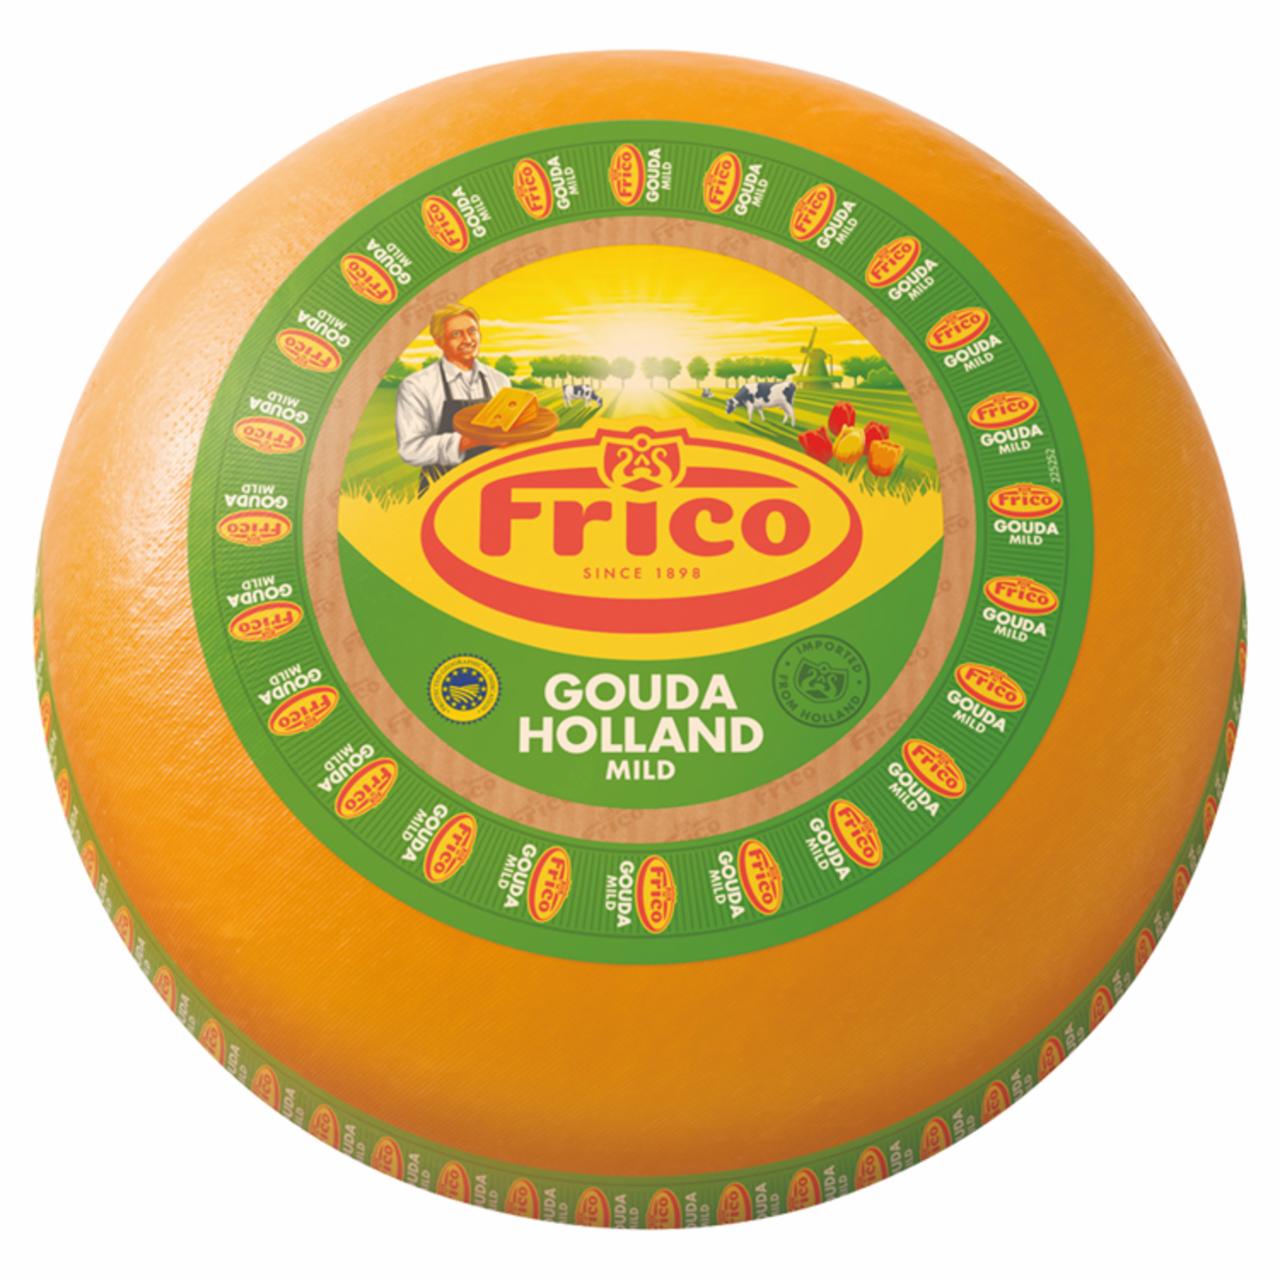 Képek - Frico zsíros, félkemény holland gouda sajt